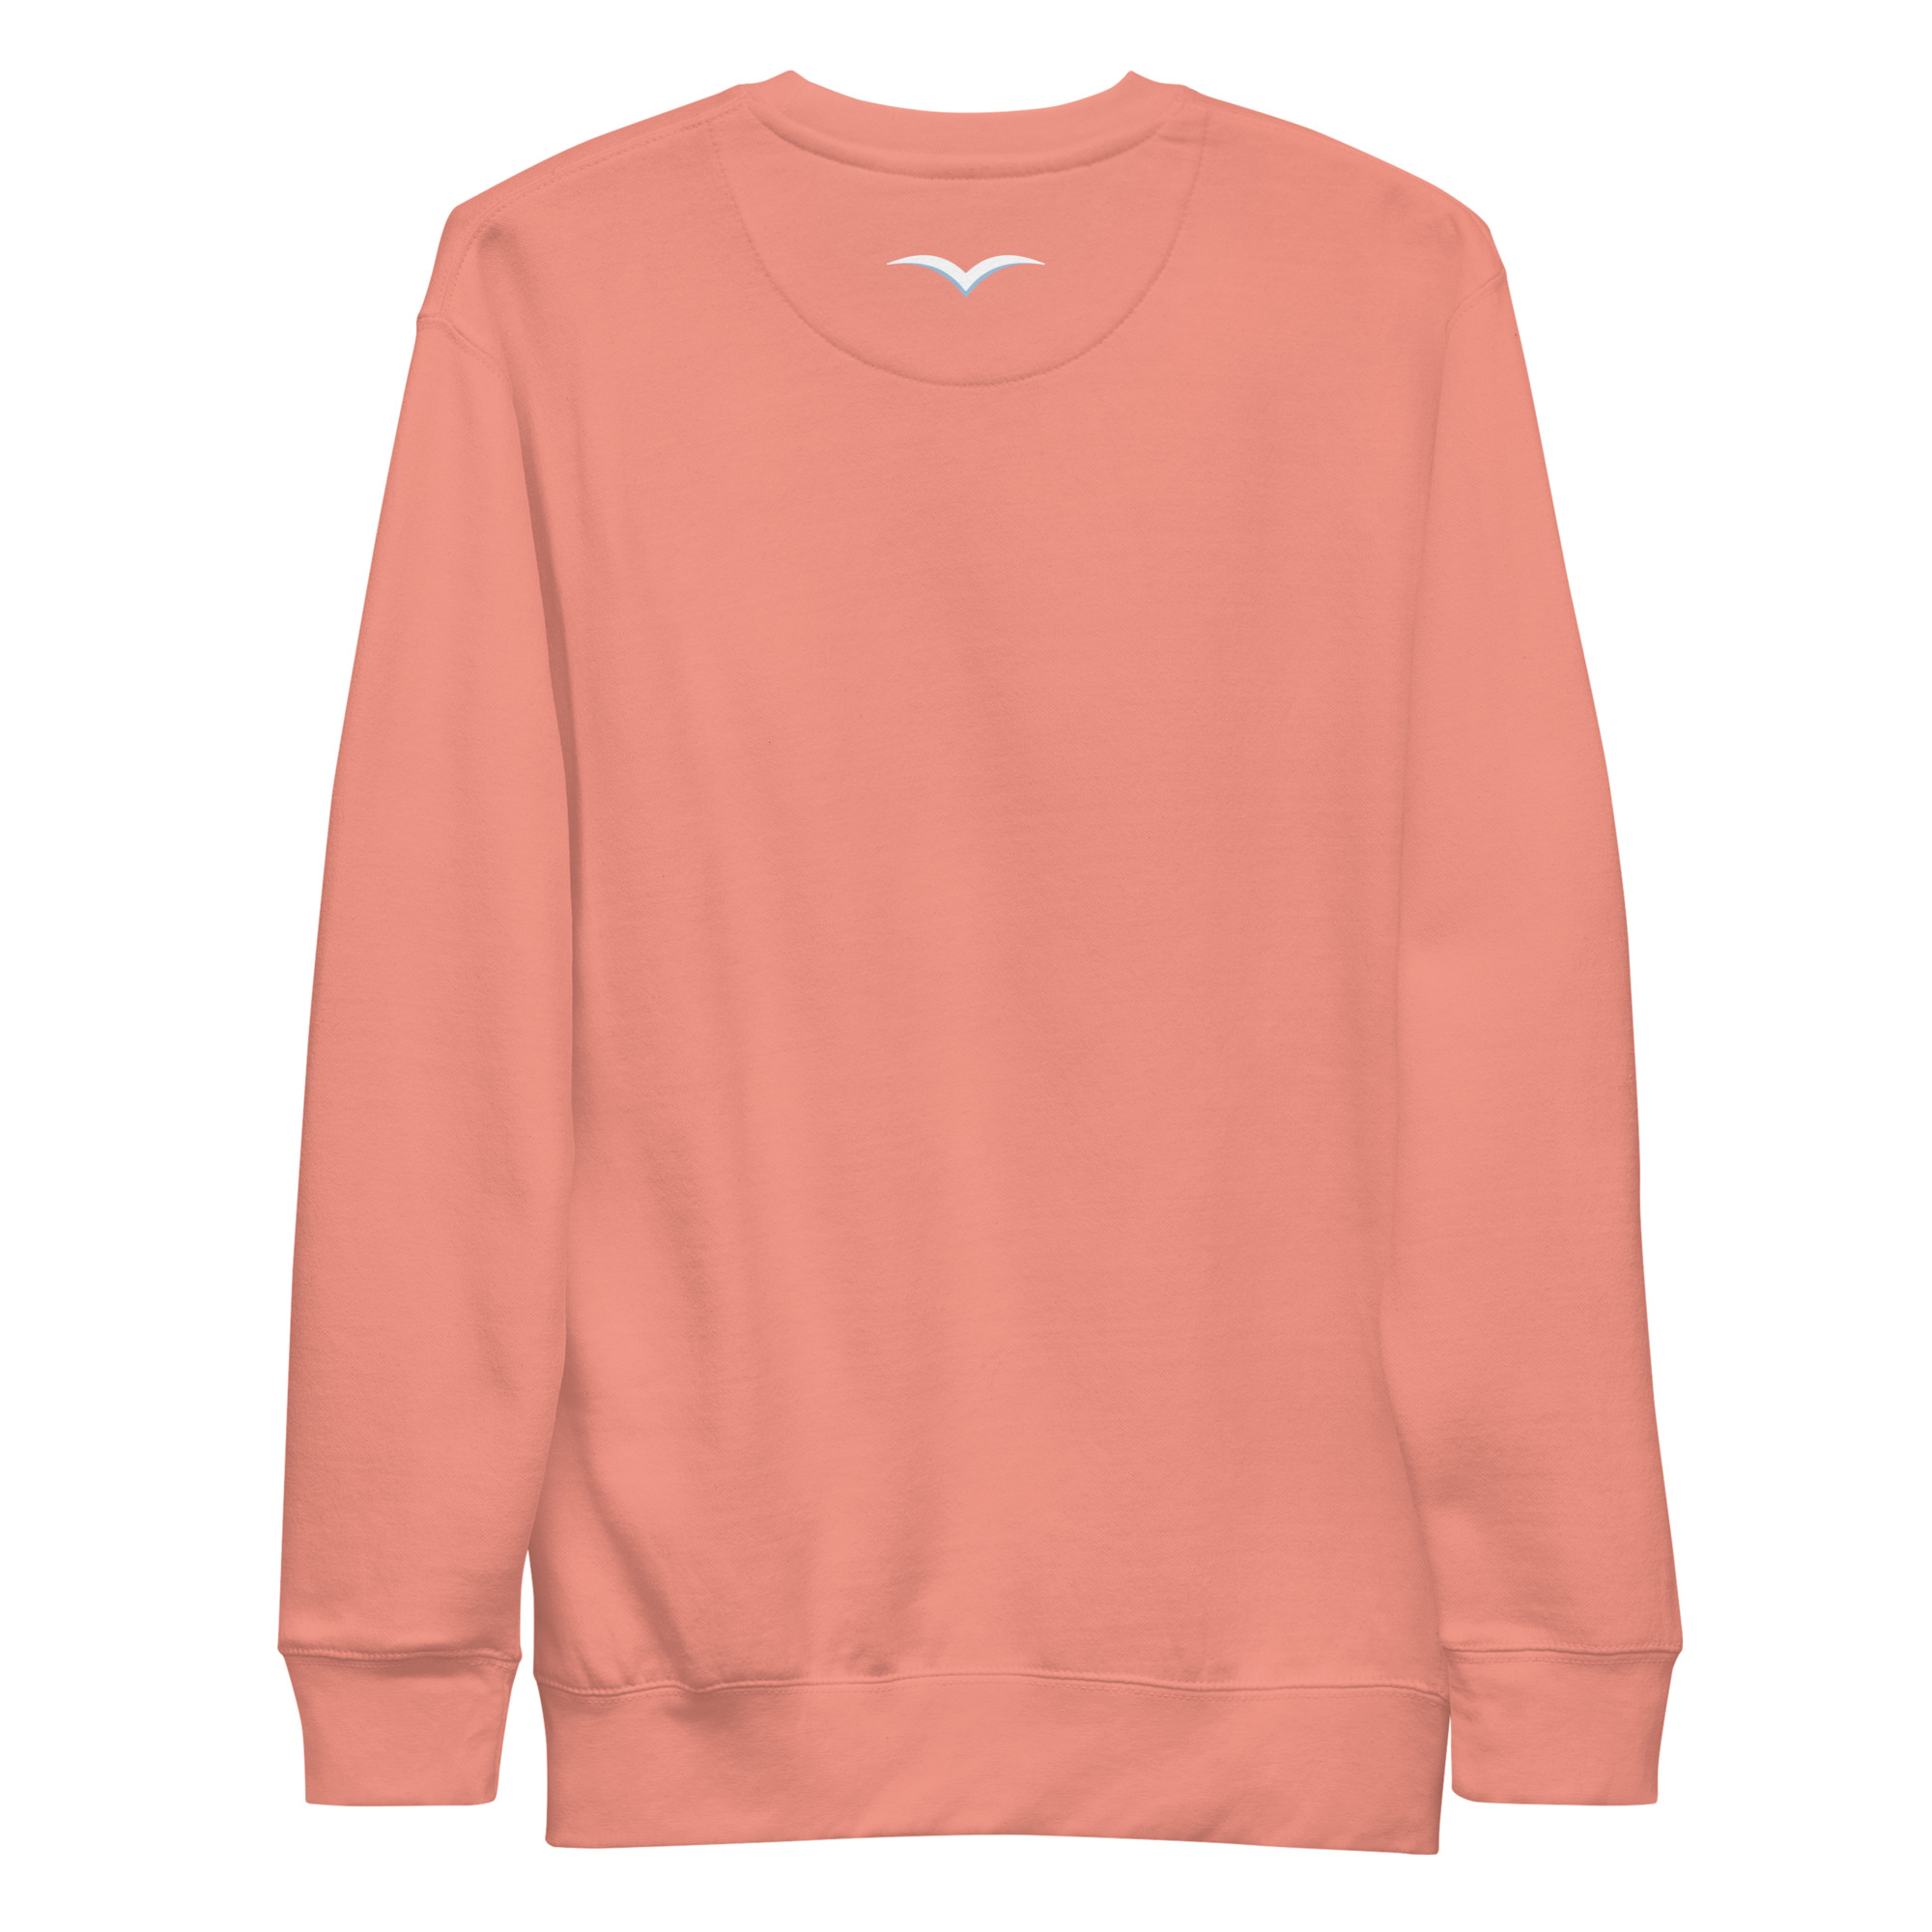 unisex-premium-sweatshirt-dusty-rose-back-64136c4449343.jpg